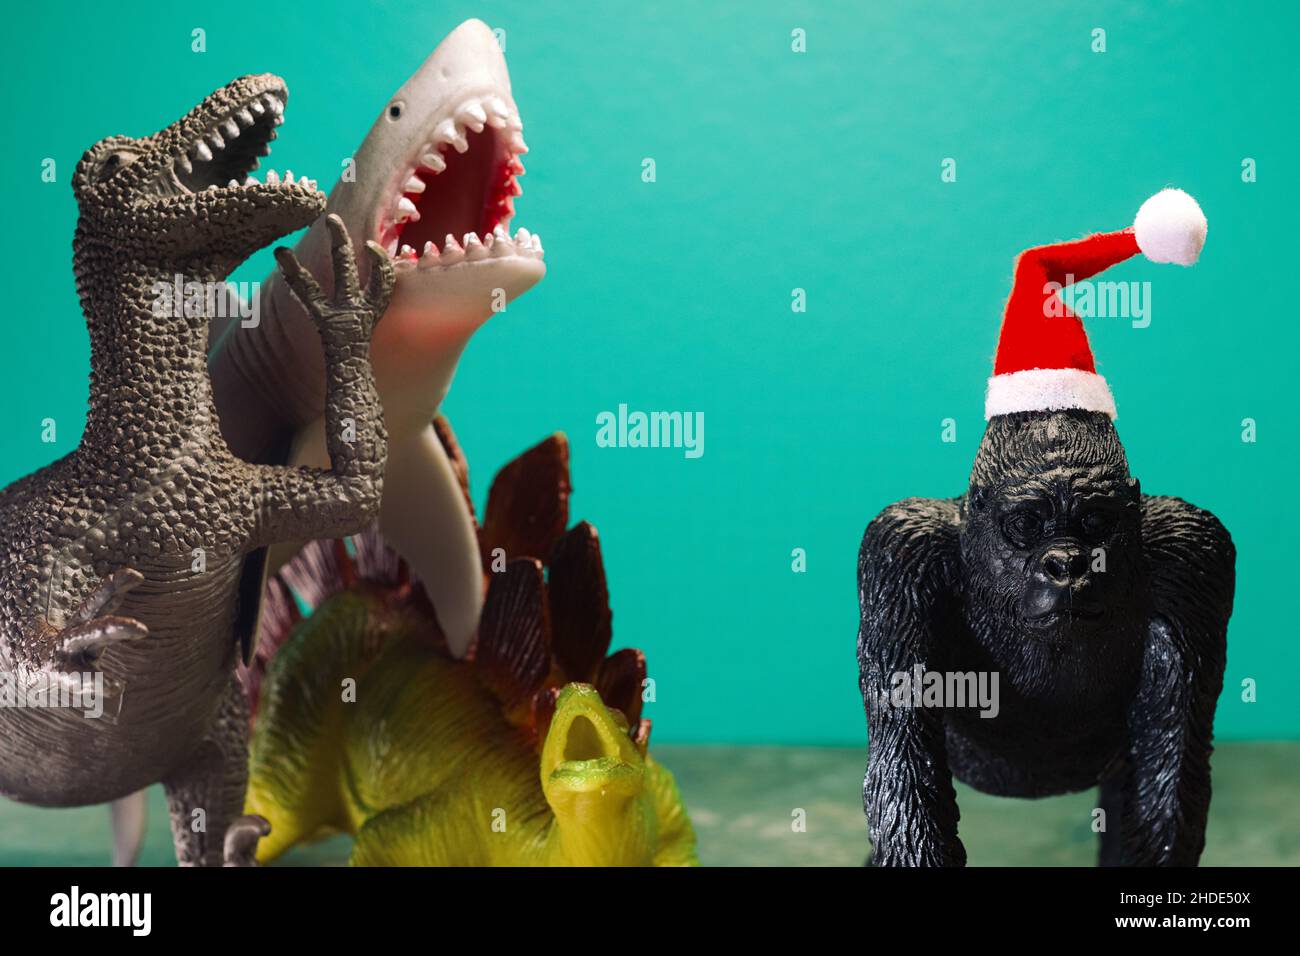 Uninvited for Christmas hysterical laughing bullies mock sad gorilla wearing santa hat as metaphor Stock Photo